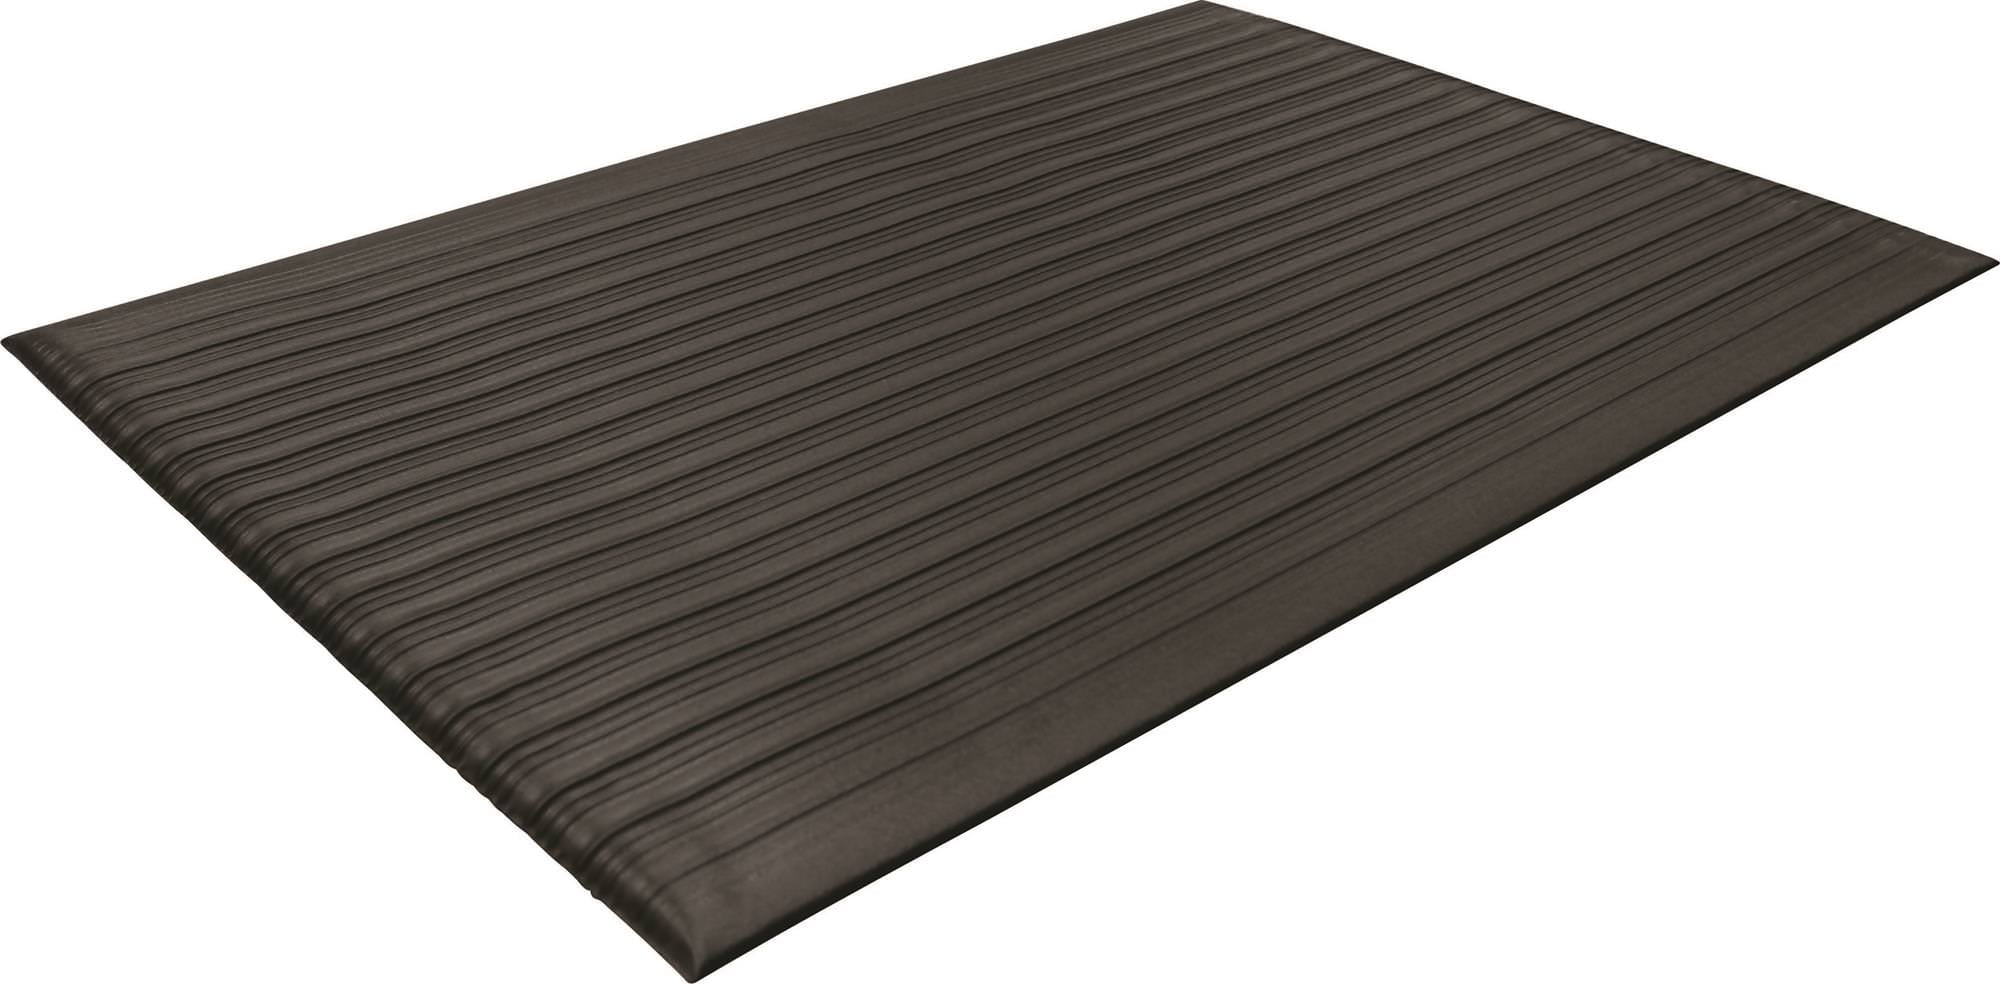 4x4 Rubber with Nylon Carpet Guardian Platinum Series Indoor Wiper Floor Mat Green 